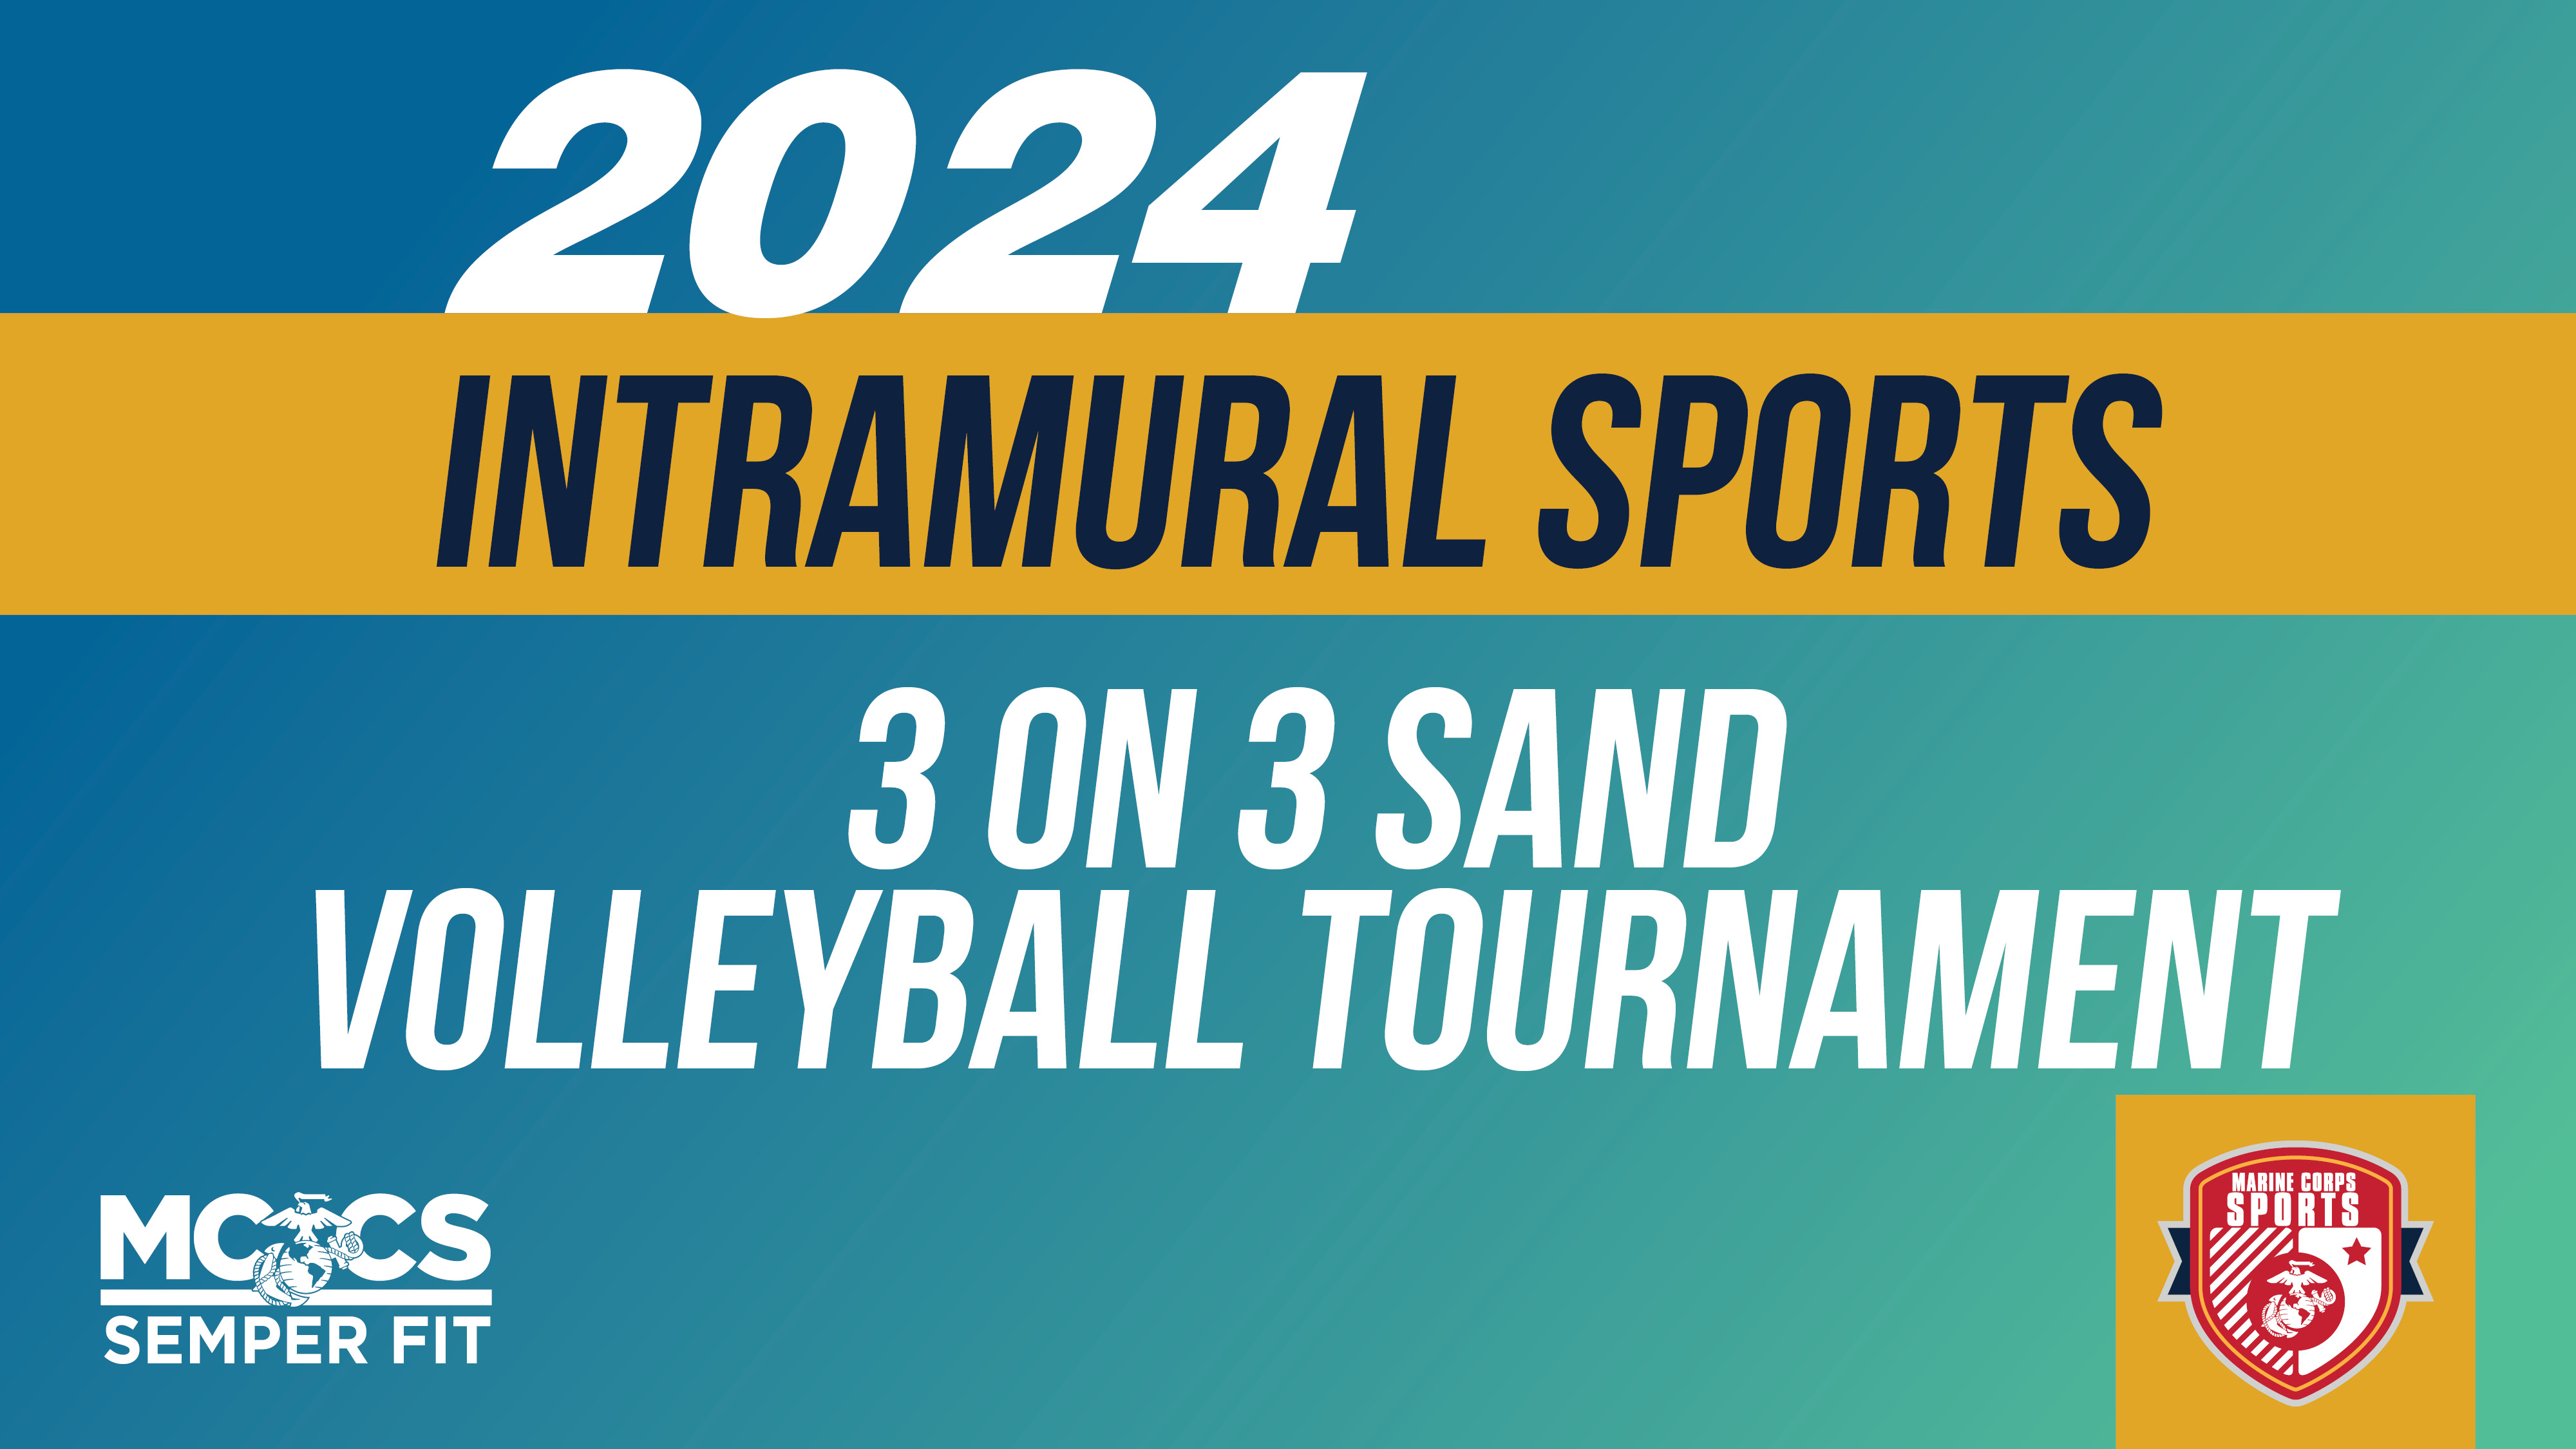 3 on 3 Sand Volleyball Tournament Registration